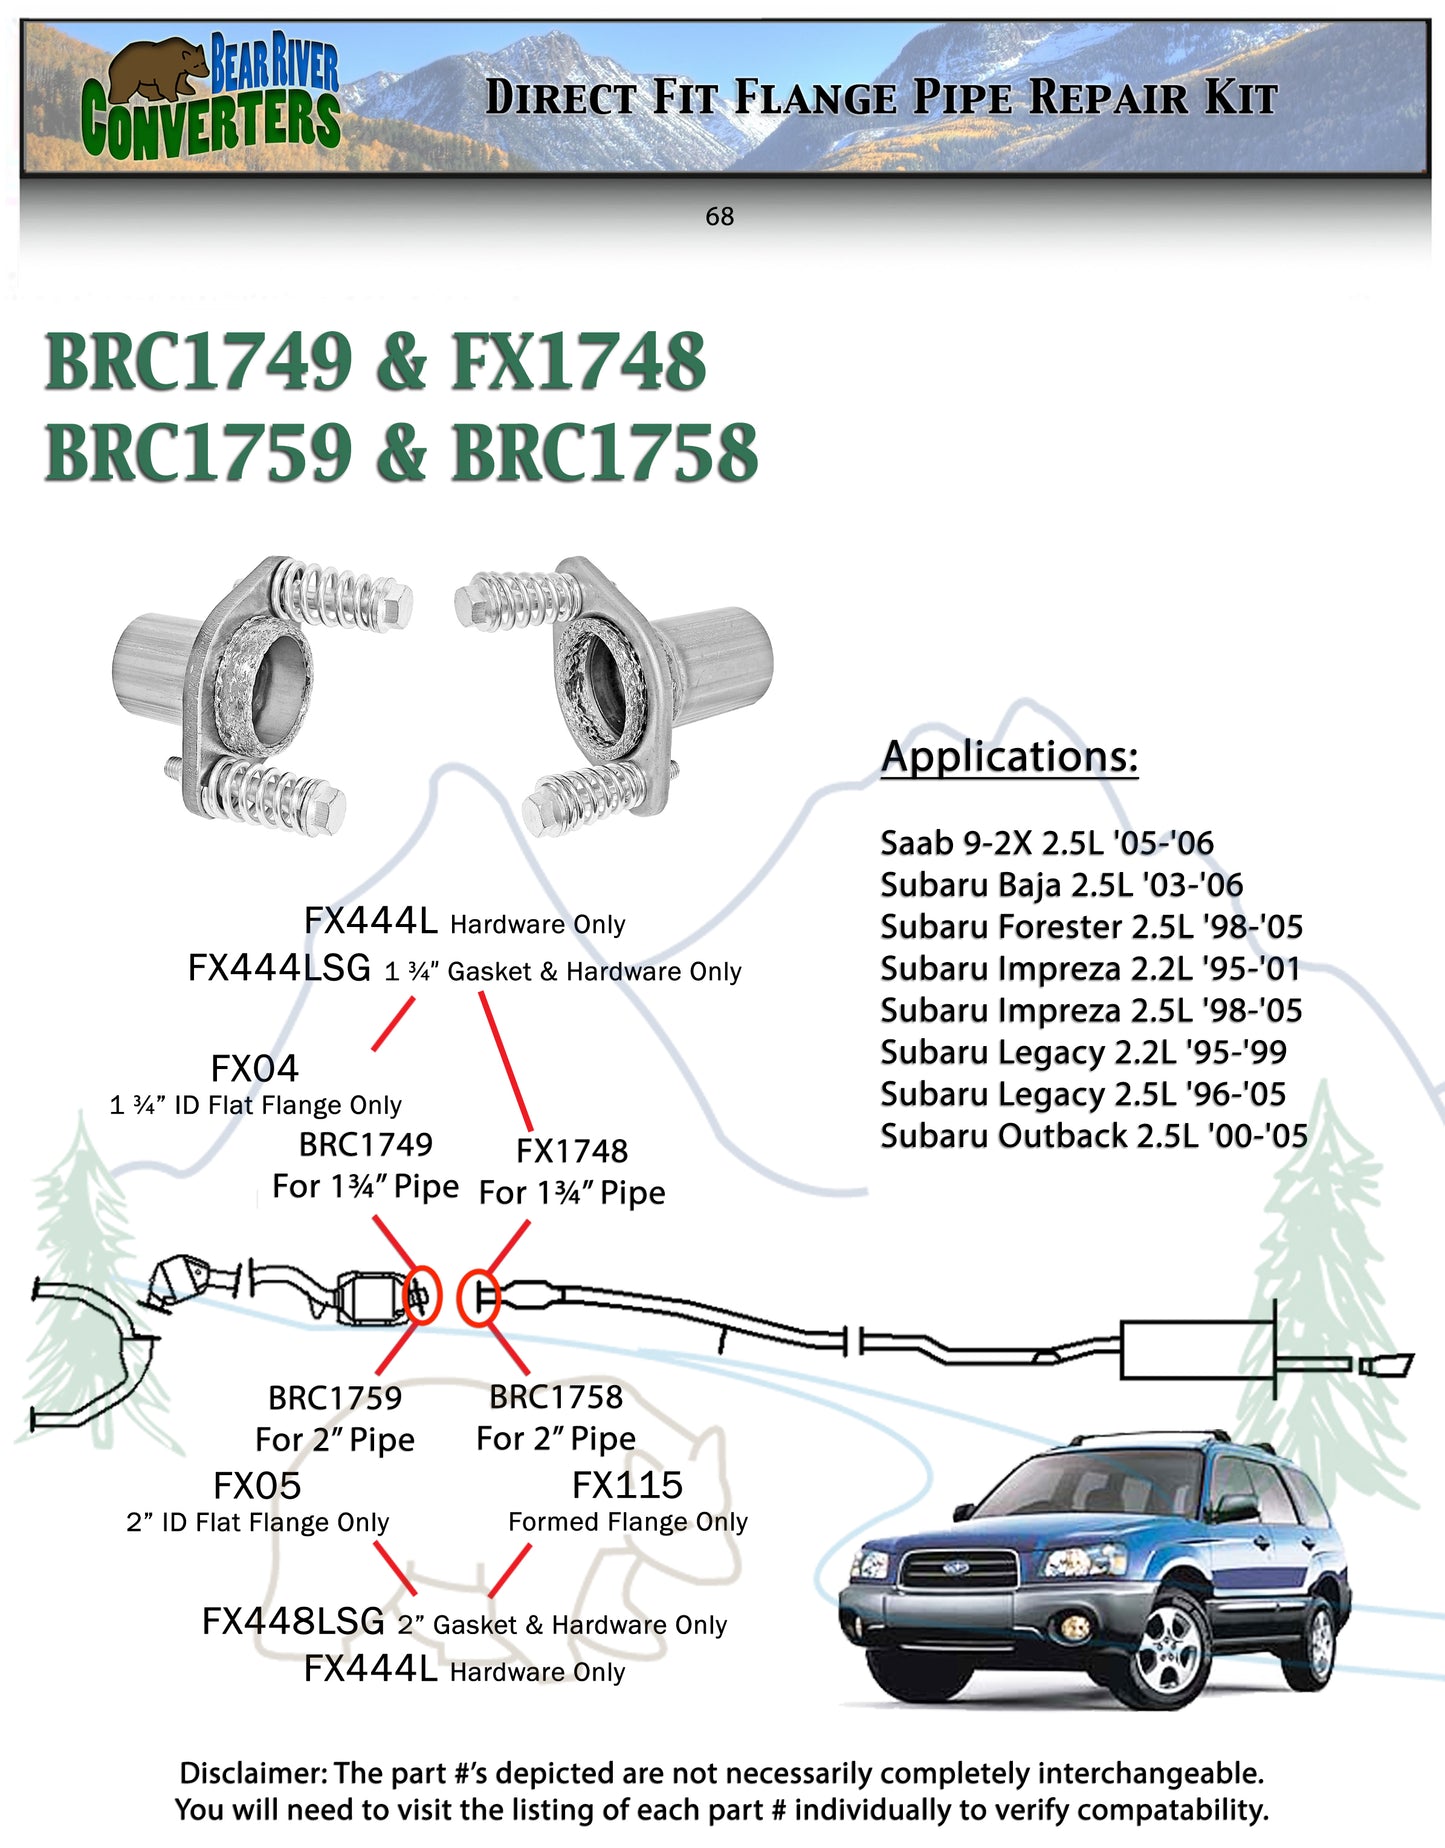 FX1748 1 3/4" Semi Direct Fit Exhaust Converter Pipe Flange Repair Kit w/ Gasket